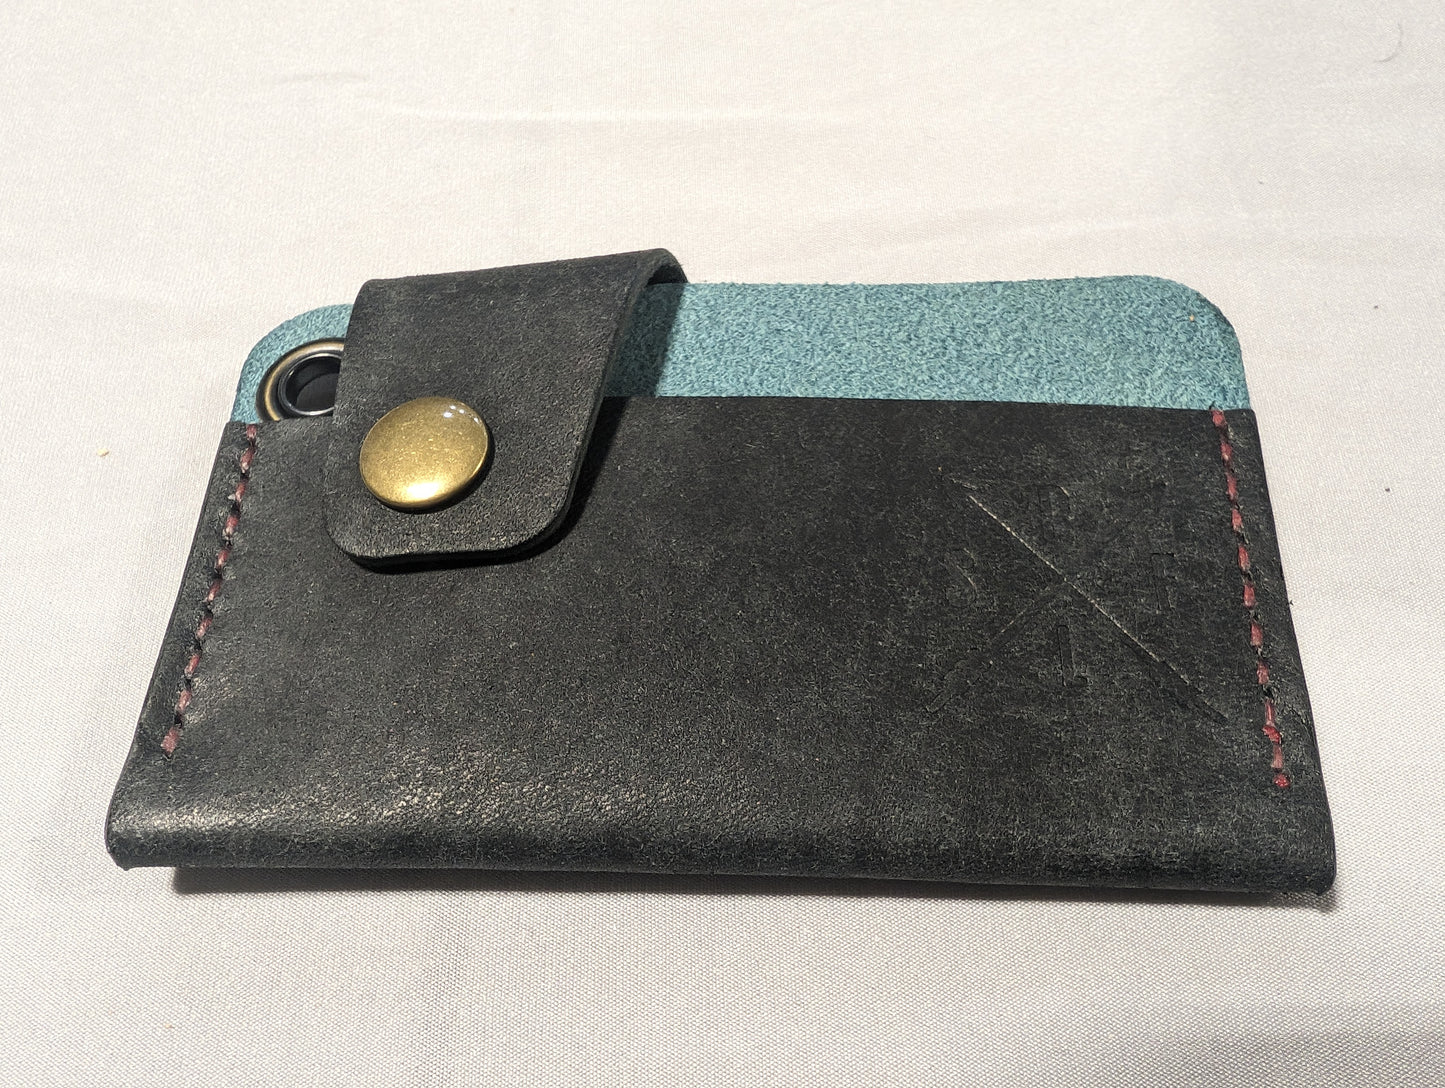 The RSO minimalist wallet